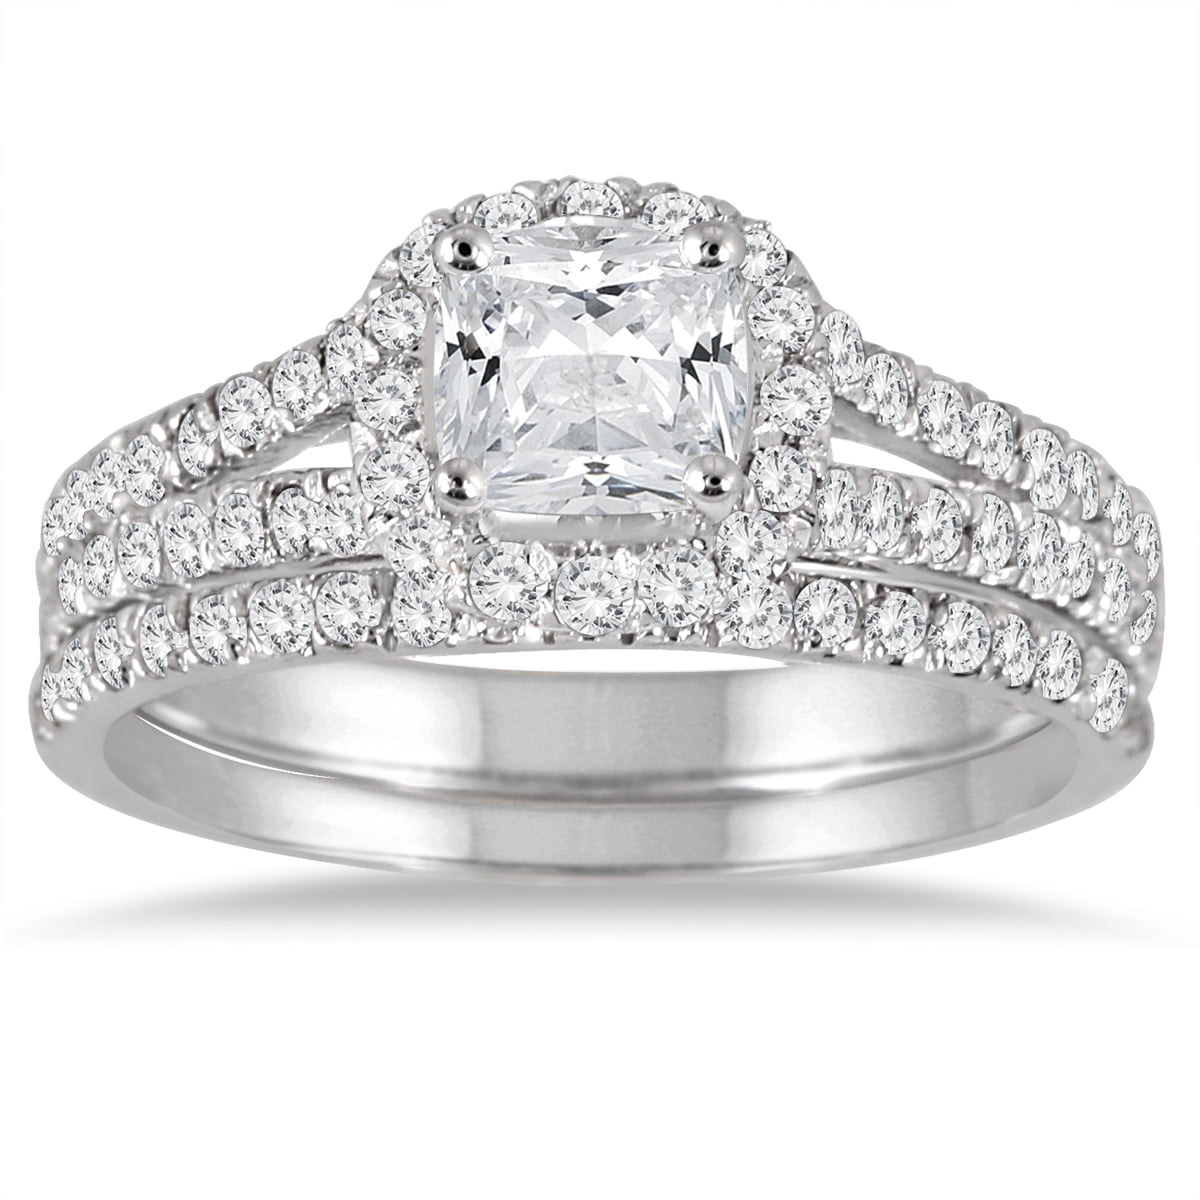 4 karat diamond wedding rings